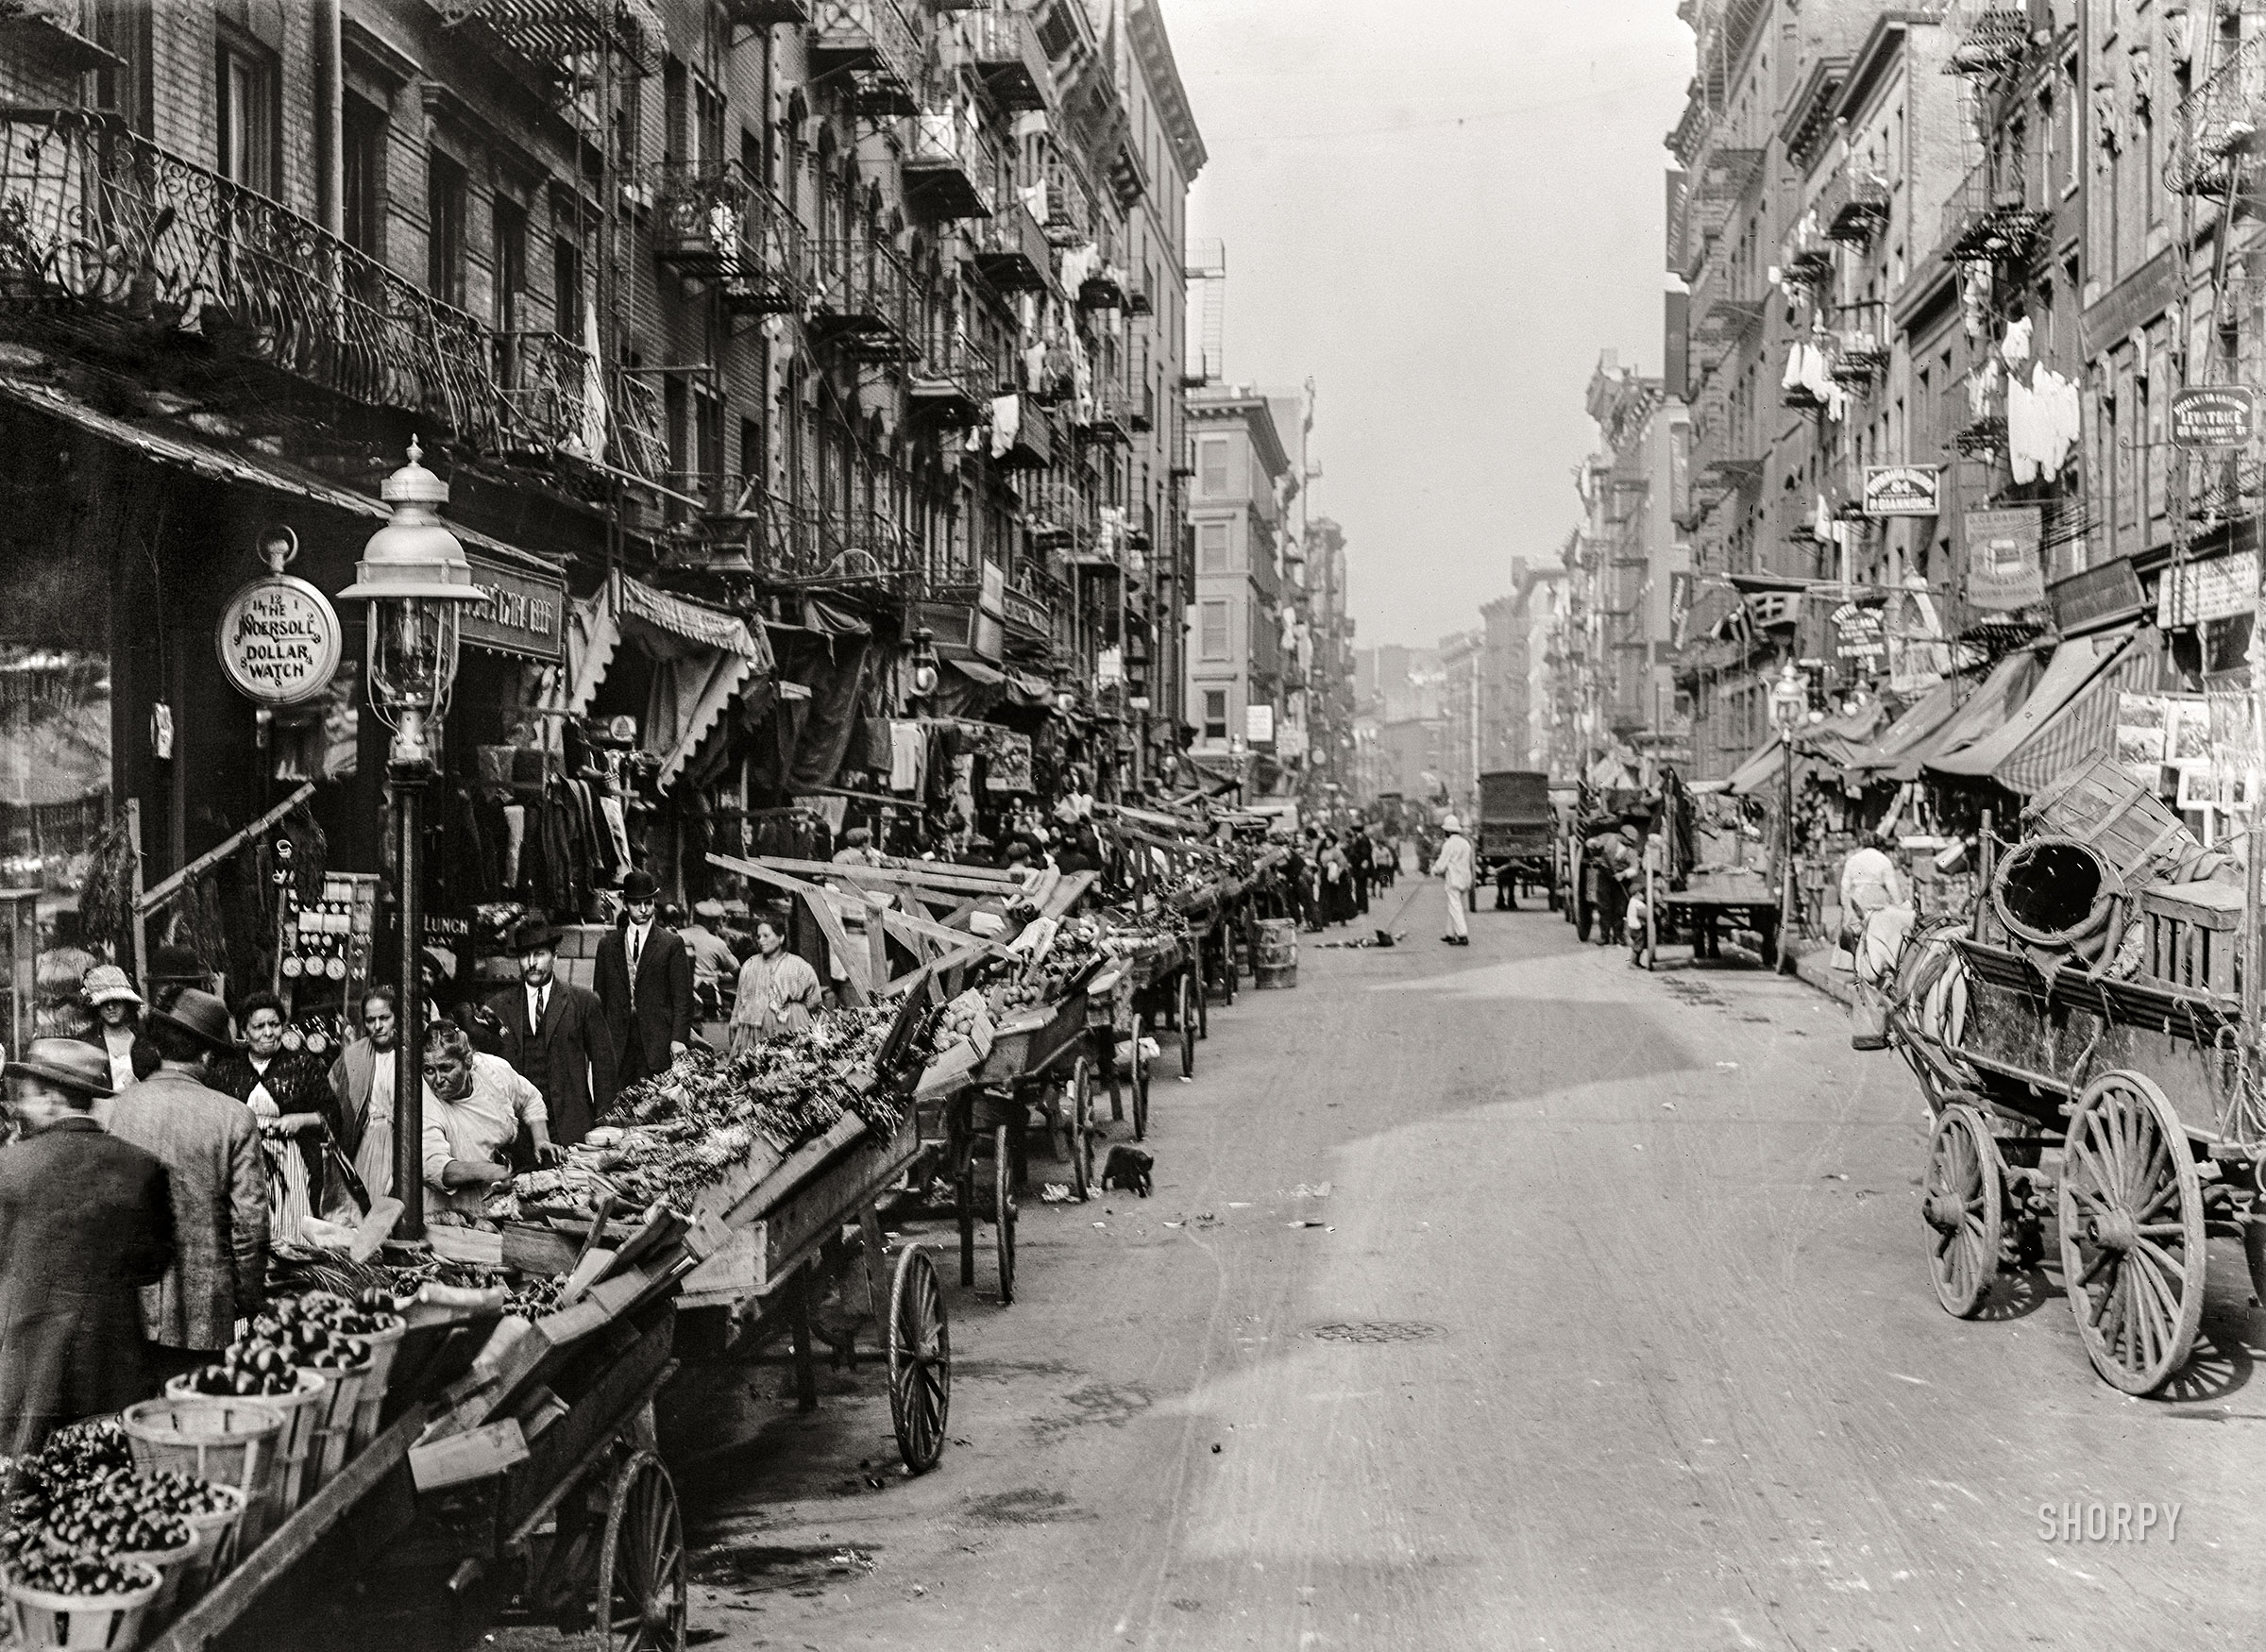 Circa 1905. "Italian neighborhood with street market -- Mulberry Street, New York." 5x7 inch dry plate glass negative, Detroit Publishing Company. View full size.